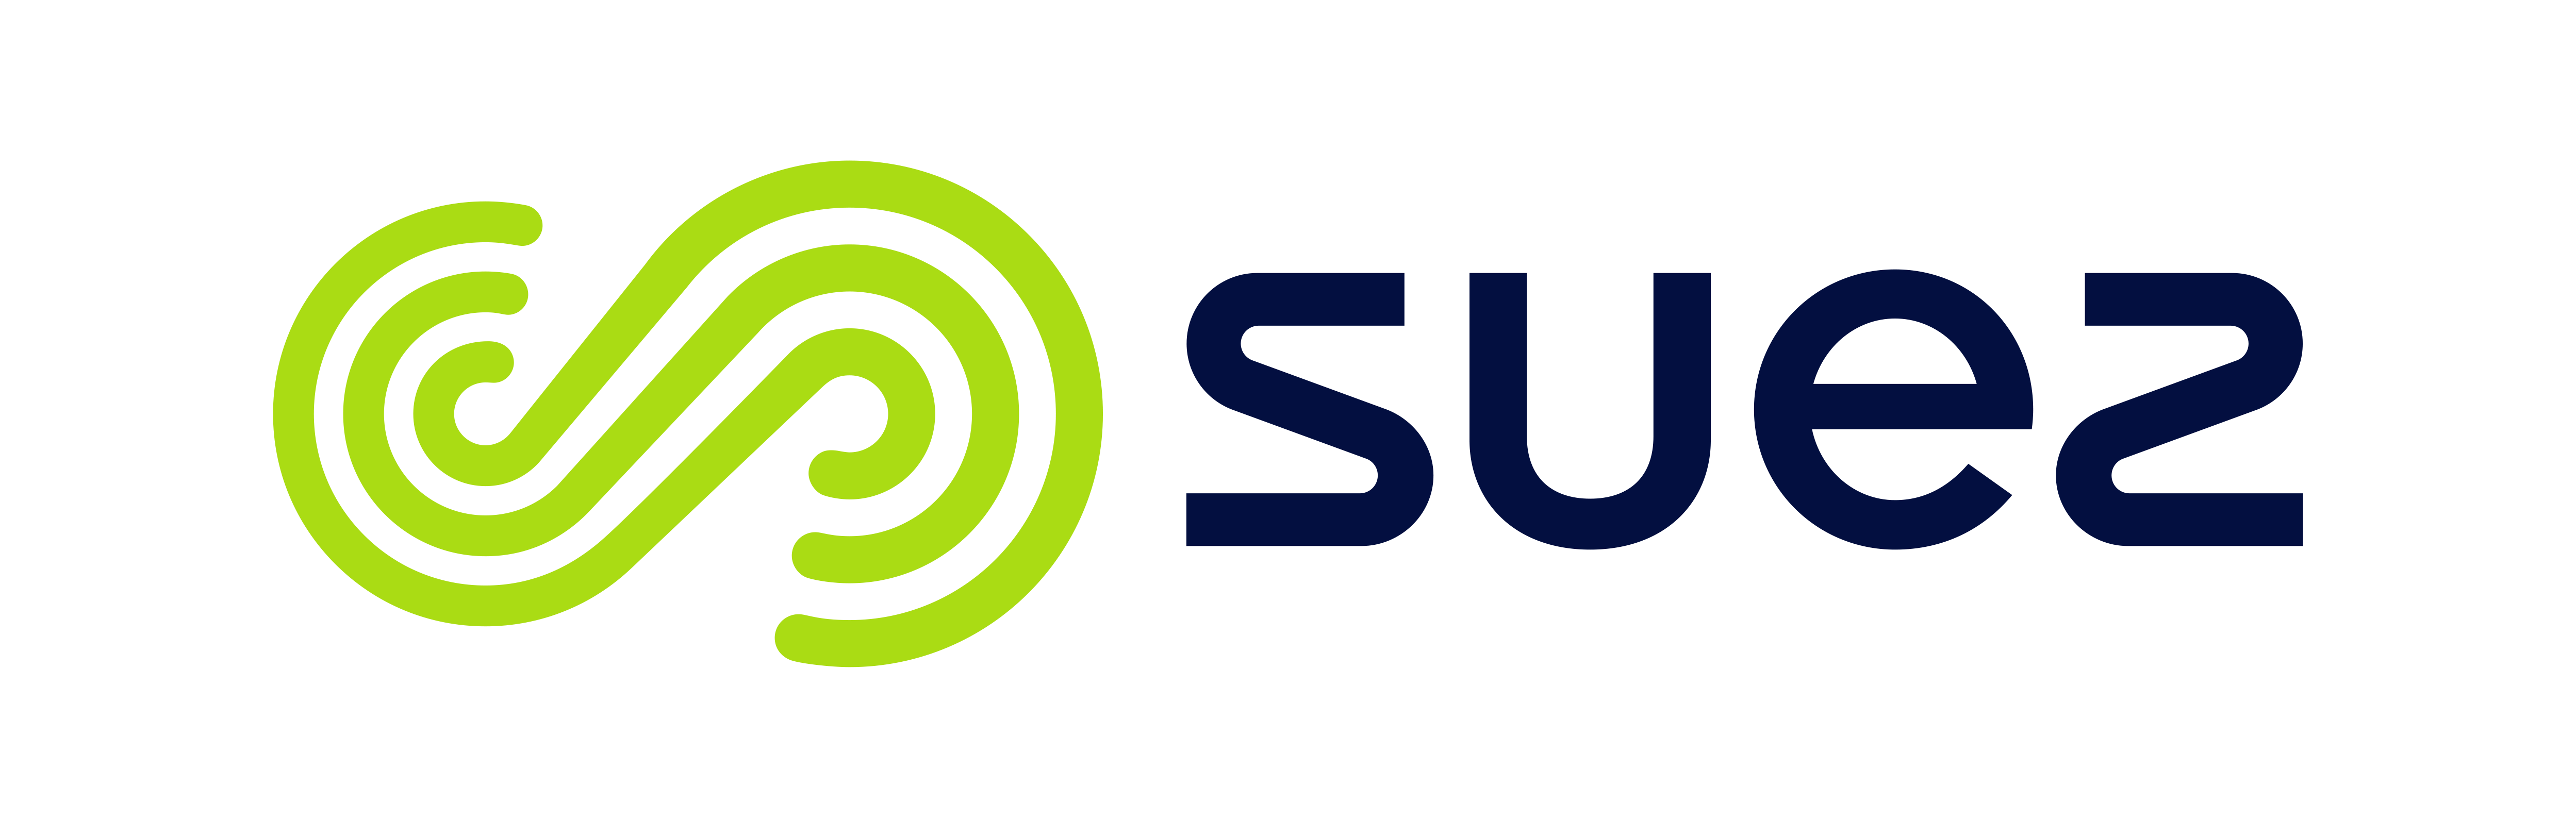 Logo SUEZ for white background